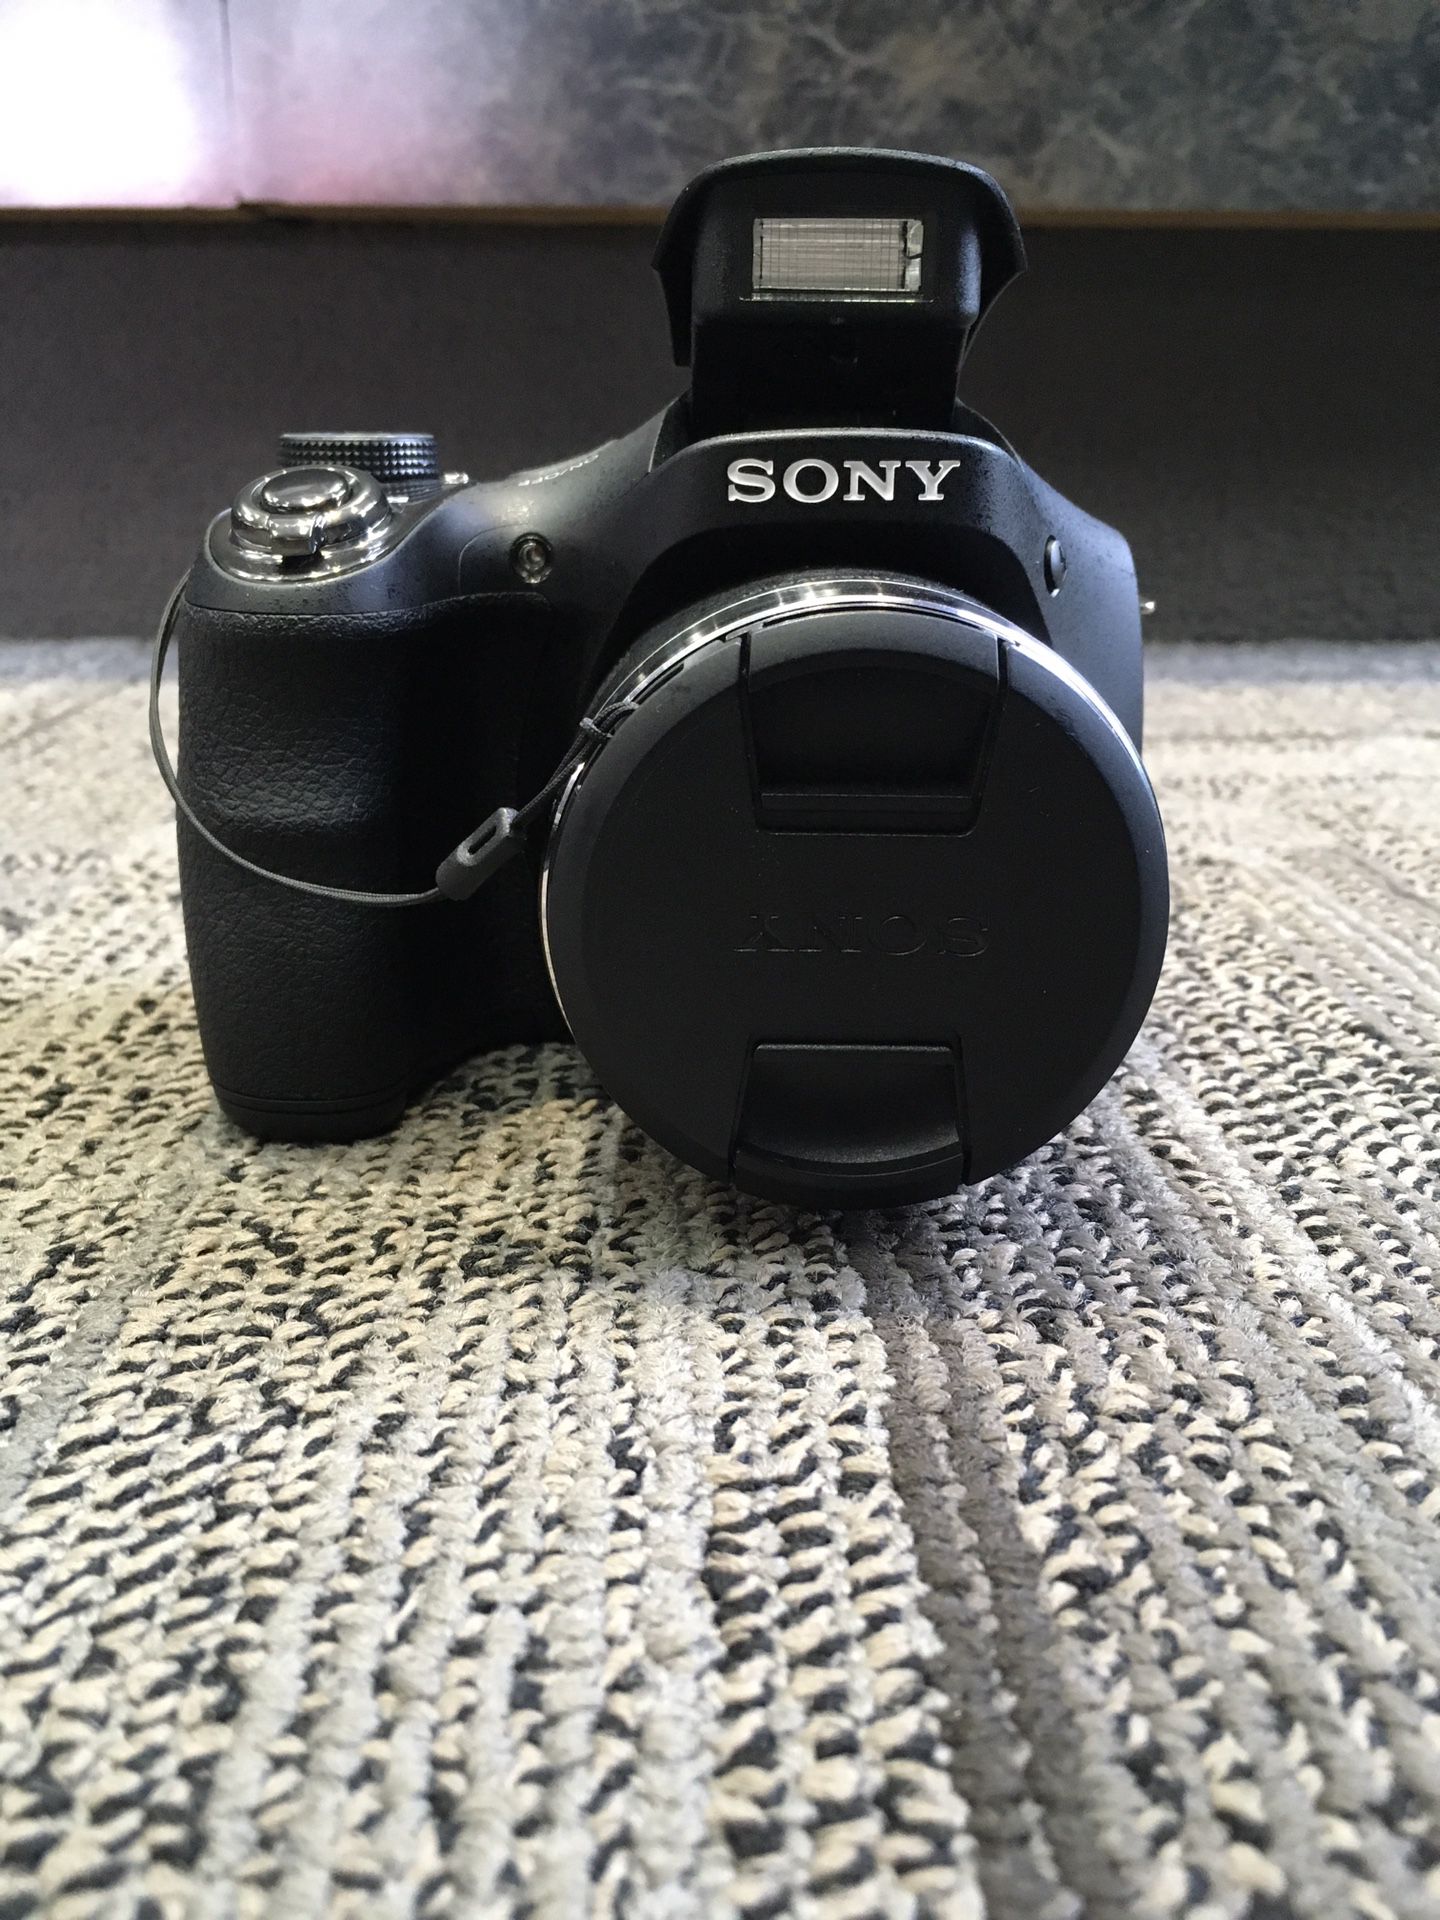 Camera (Sony Cyber-Shot DSC-H300)